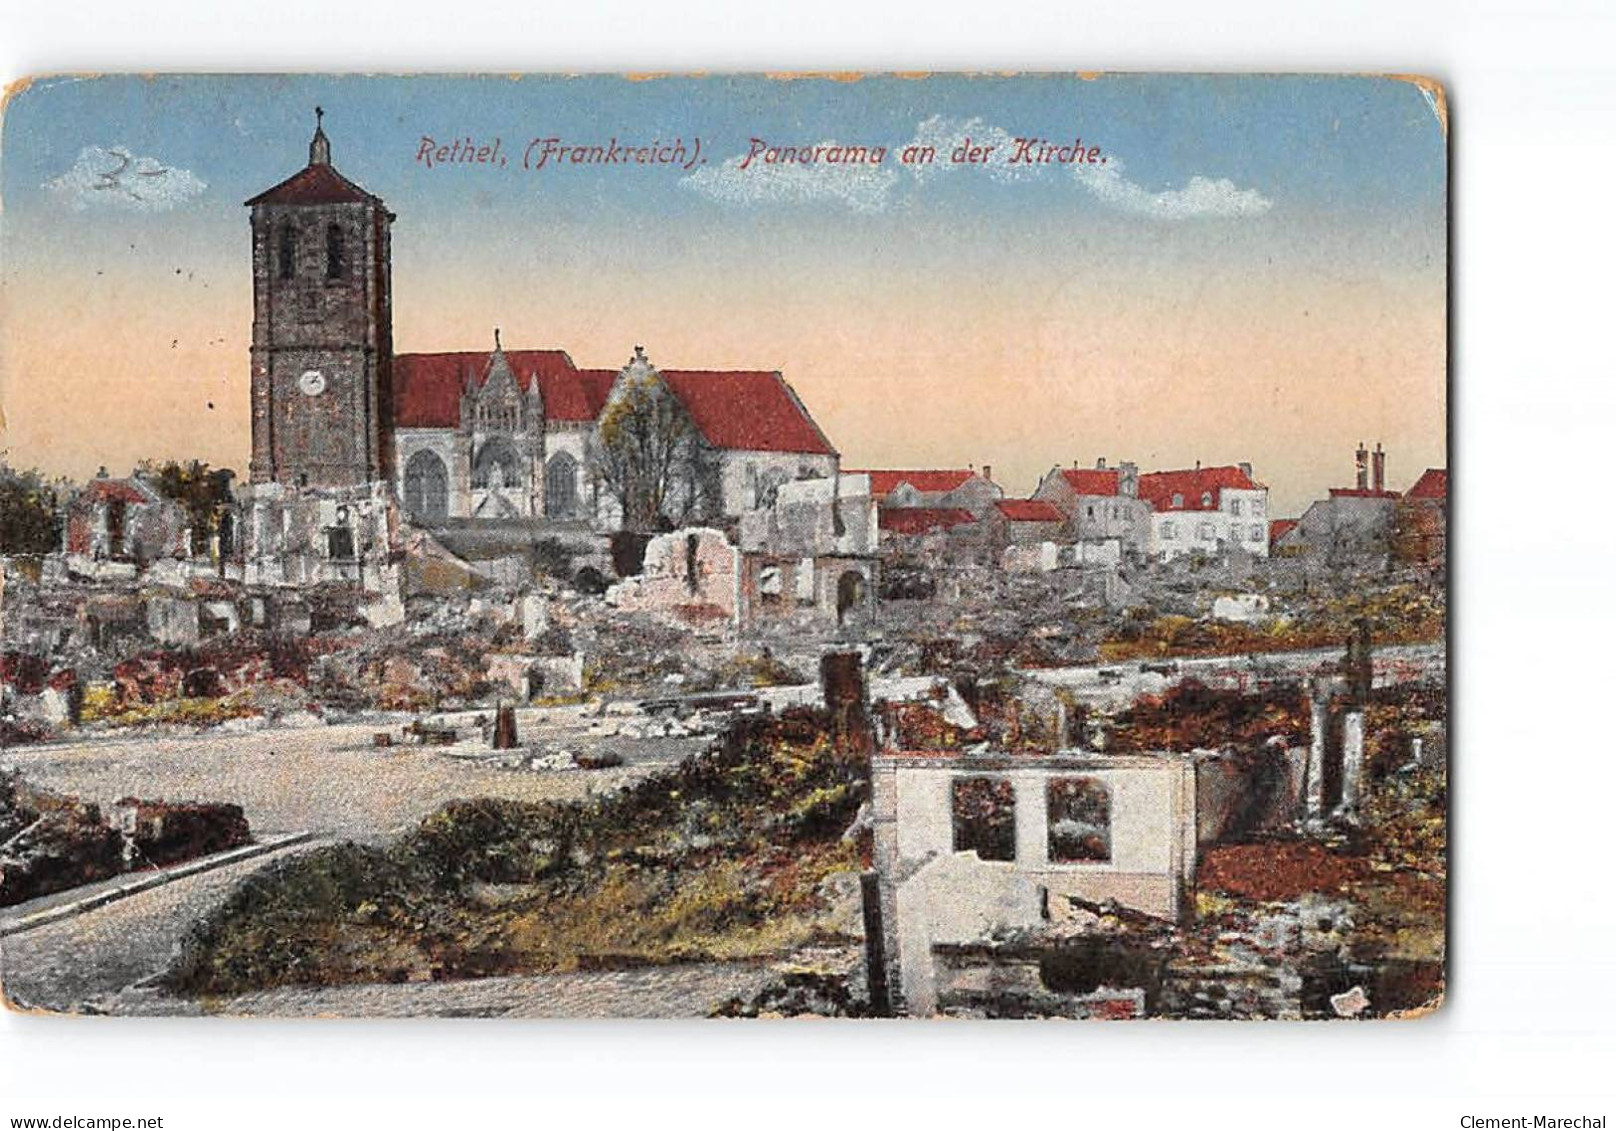 RETHEL - Panorama An Der Kirche - Eglise - Carte Allemande - état - Rethel